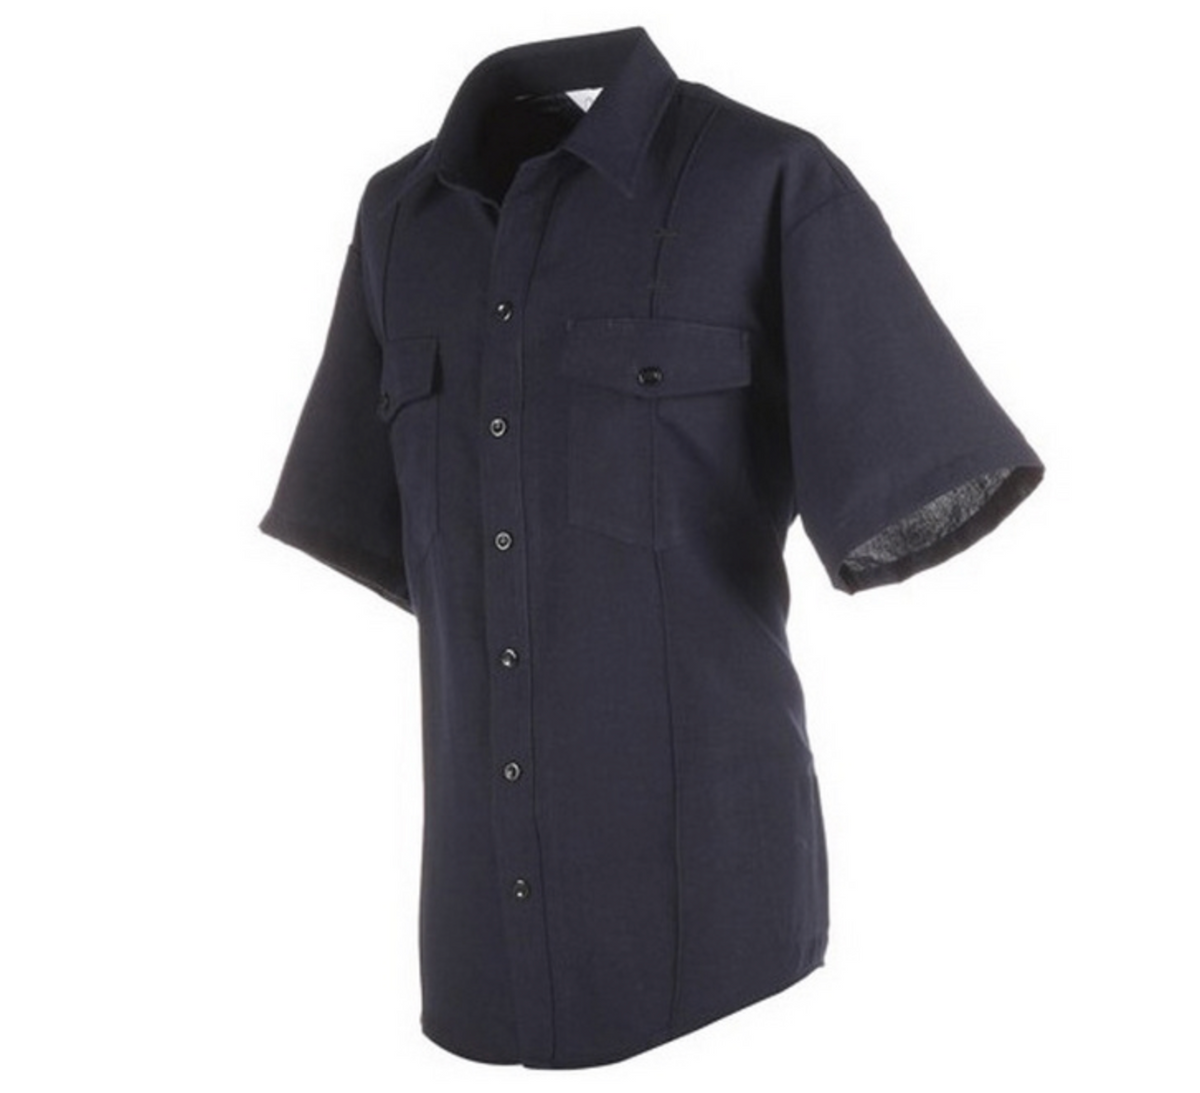 Northern Safari Name Patch Uniform Work Shirt Personalized Embroidered Black Border-graphite Iron On, Black / Graphite Grey Script